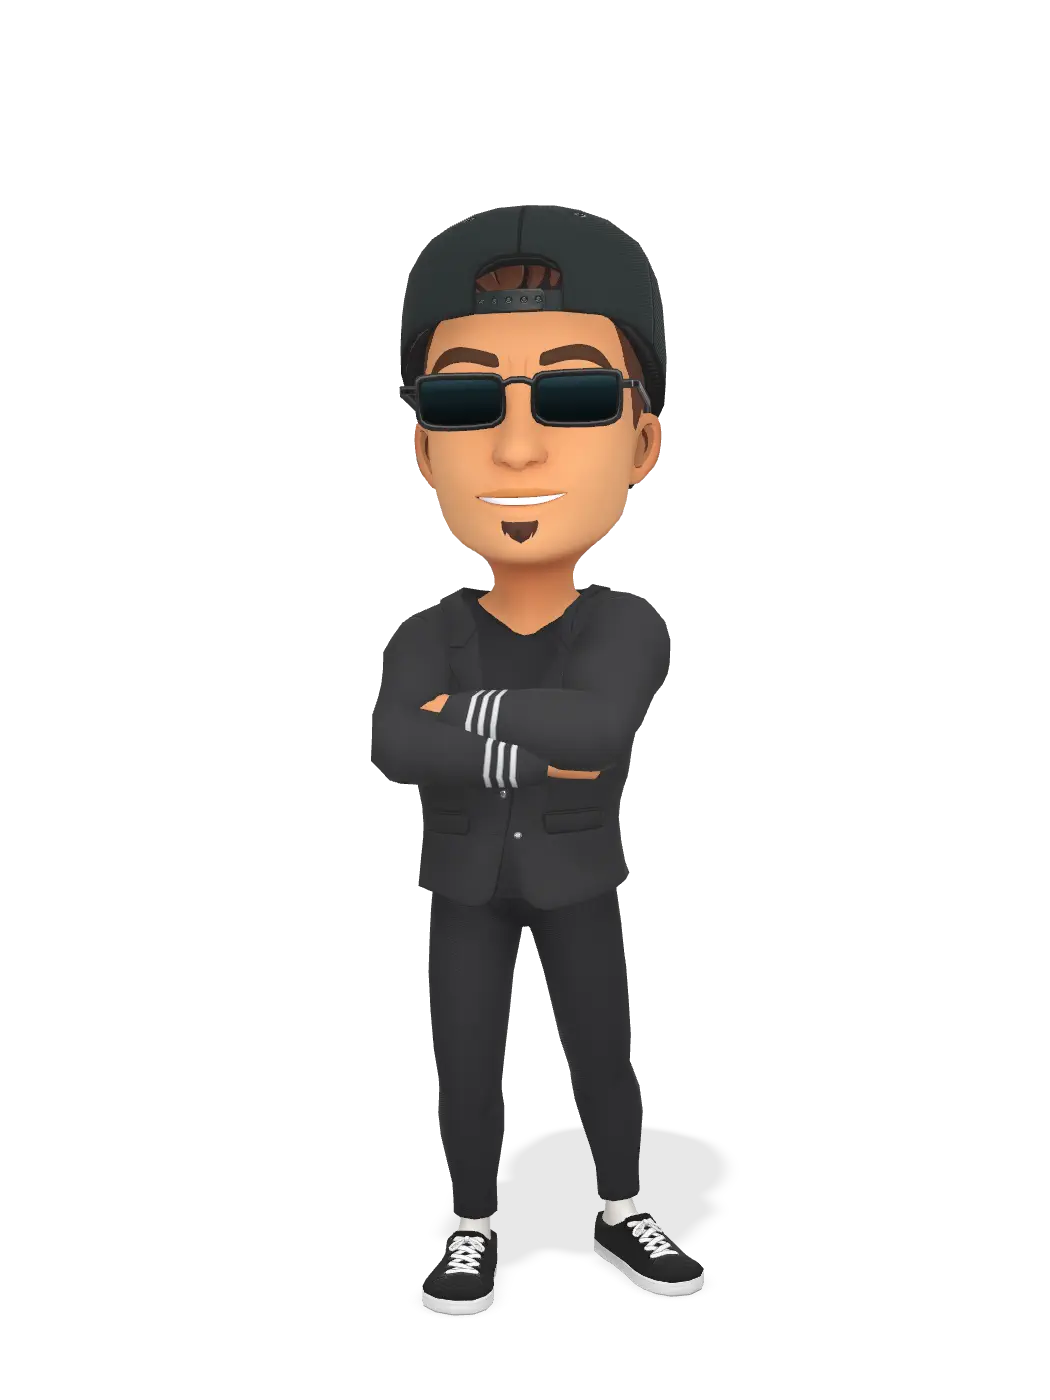 3D Bitmoji for drewboudreaux7 avatar